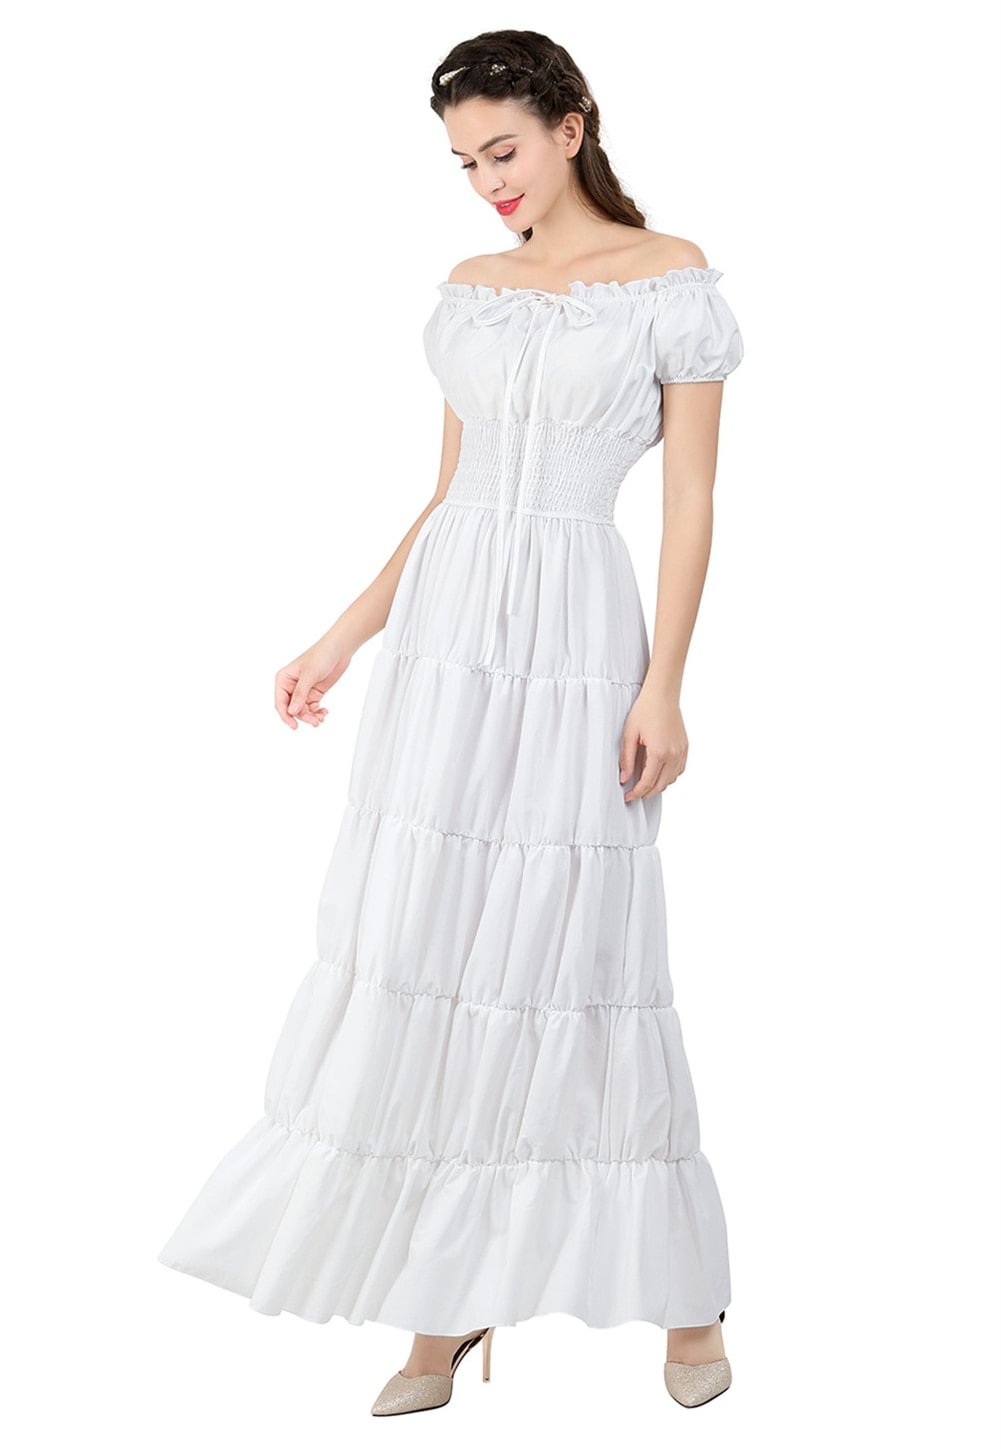 Uaang Dress with Corset Belt Medieval Renaissance Dress for Women Elegant Long White Dresses with Short Sleeves